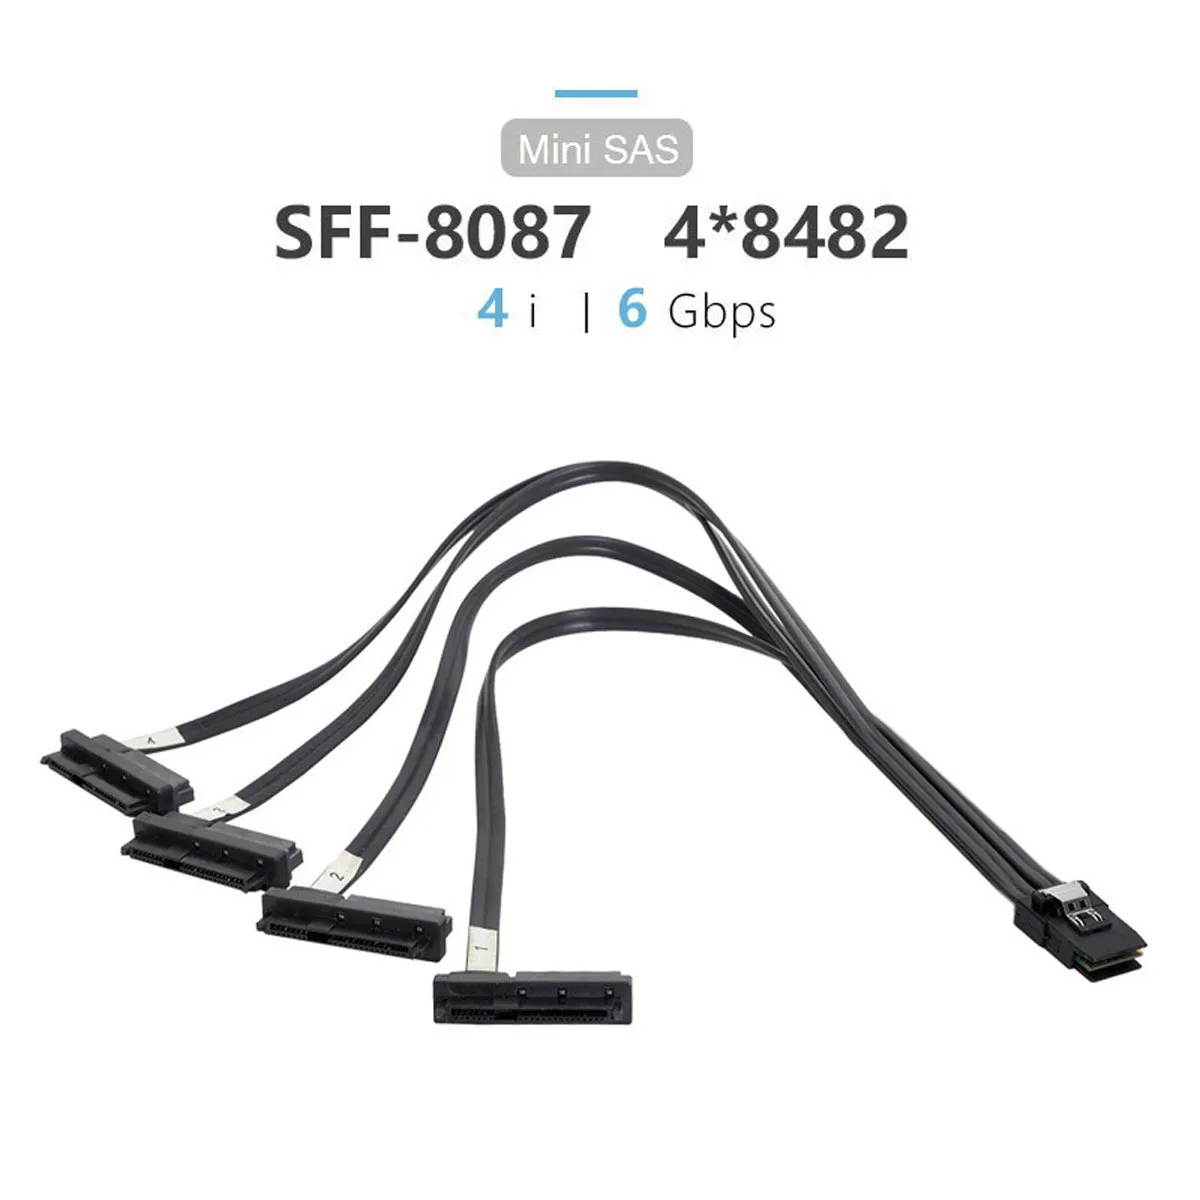 

Jimier Internal 36 Pin Mini SAS SFF-8087 Host to 4 SFF-8482 Target SAS Hard Disk and SATA Power Cable 50cm